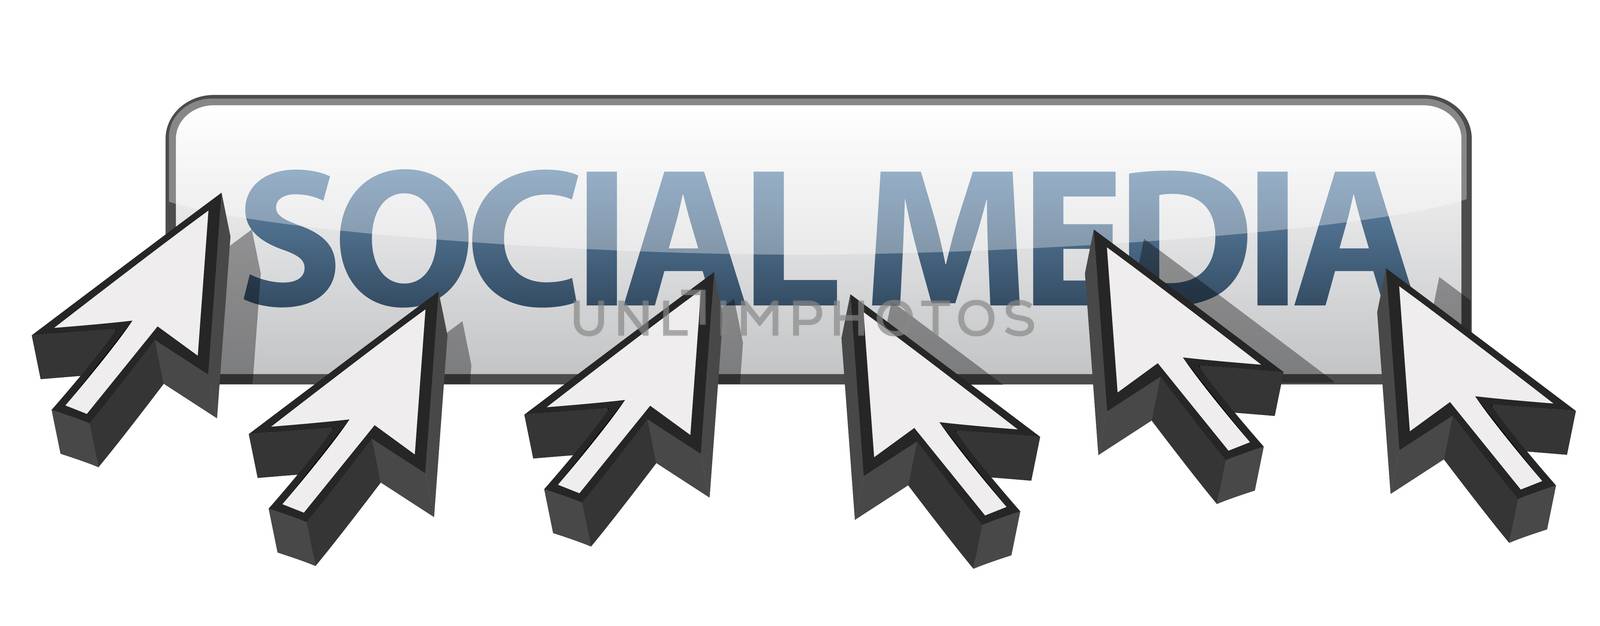 multiple cursors around social media button